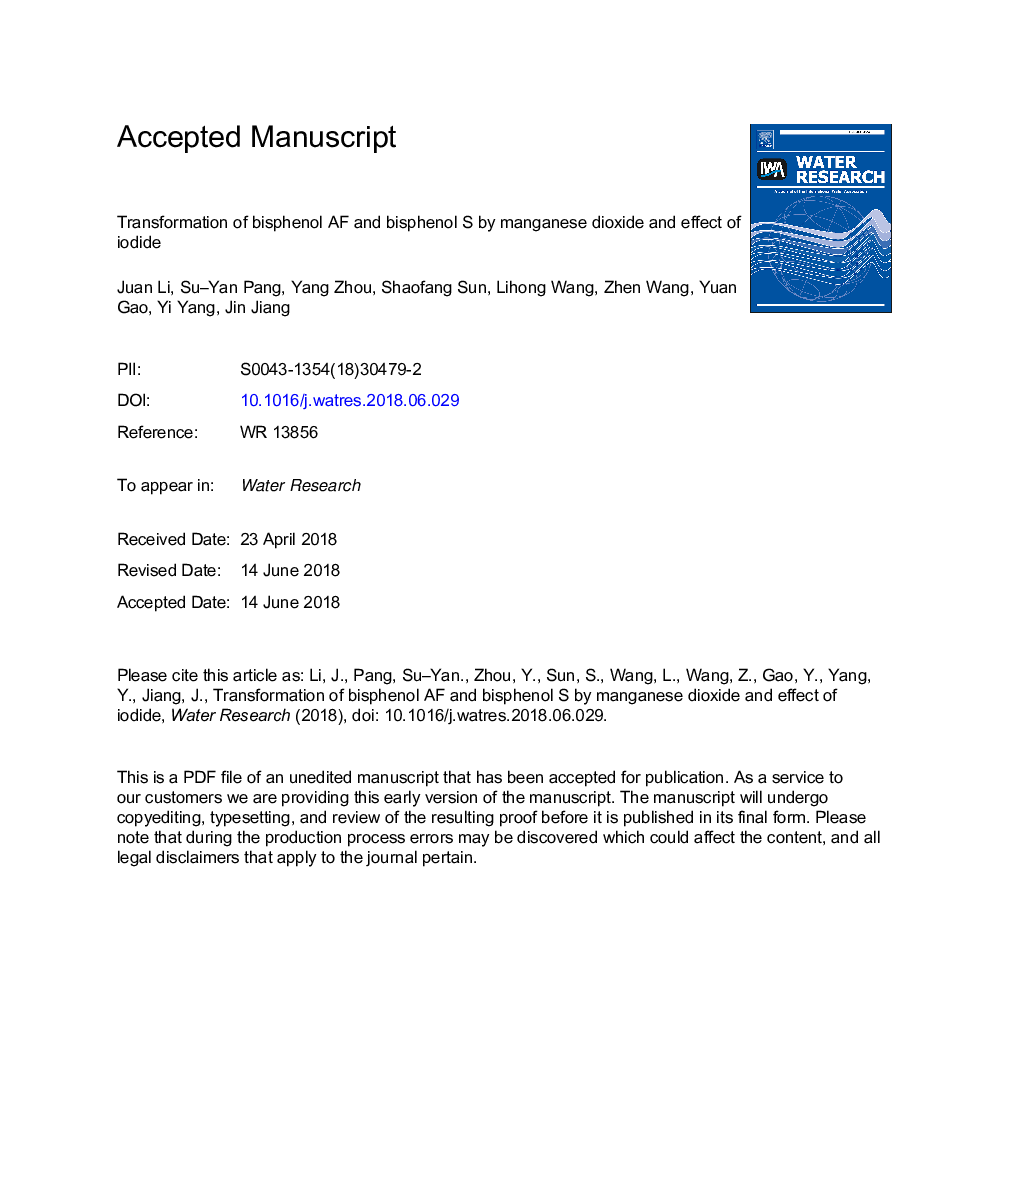 Transformation of bisphenol AF and bisphenol S by manganese dioxide and effect of iodide